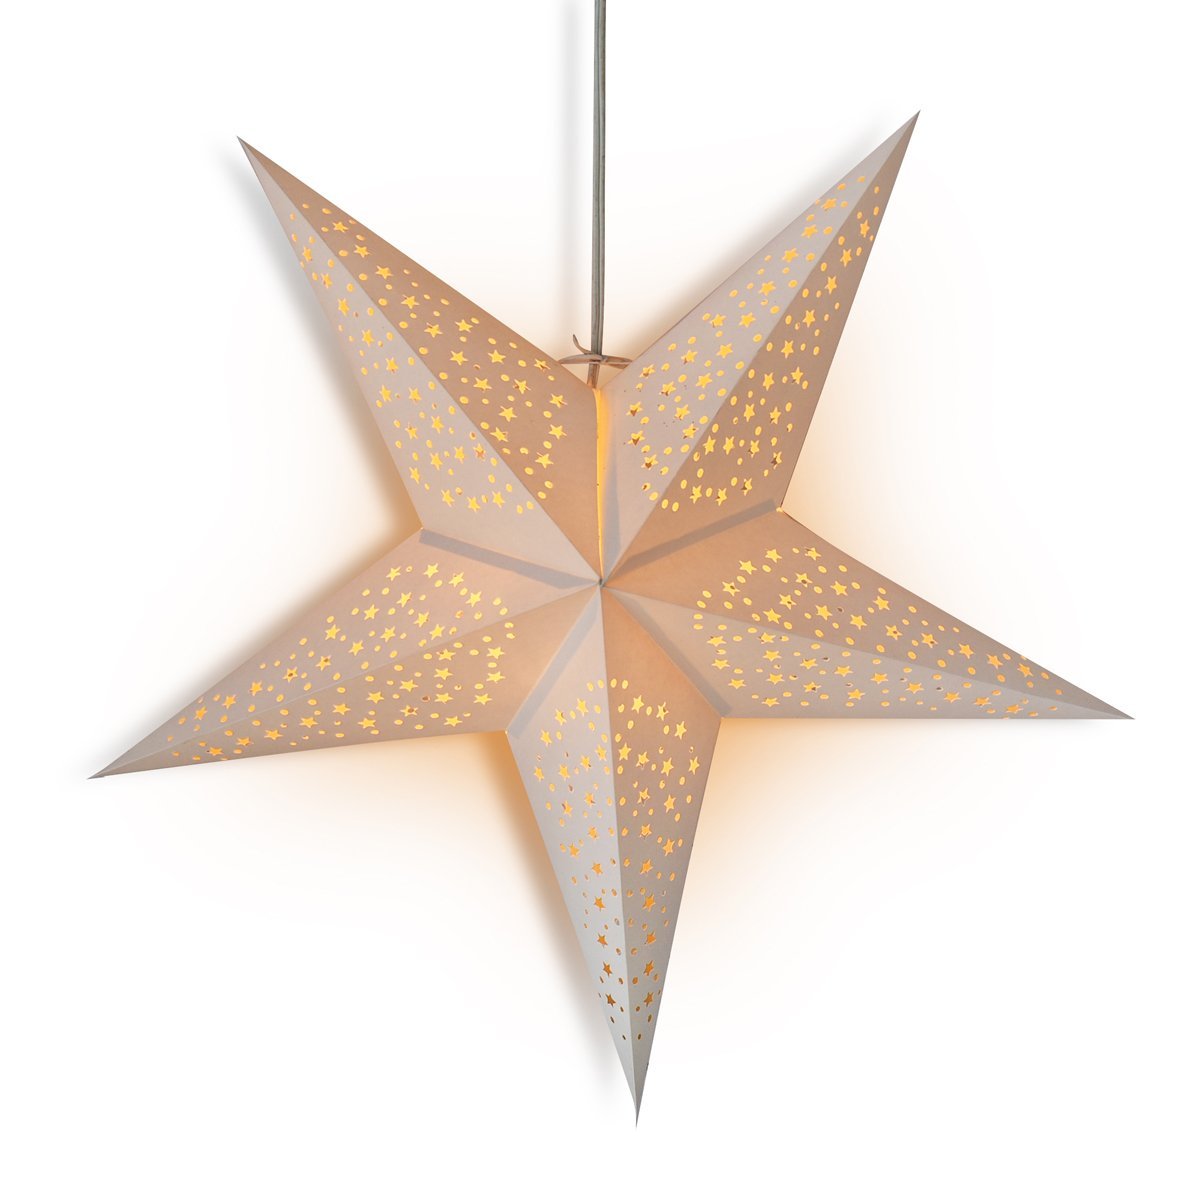 24" White 'Thousand Stars' Paper Star Lantern, Hanging Wedding & Party Decoration - PaperLanternStore.com - Paper Lanterns, Decor, Party Lights & More